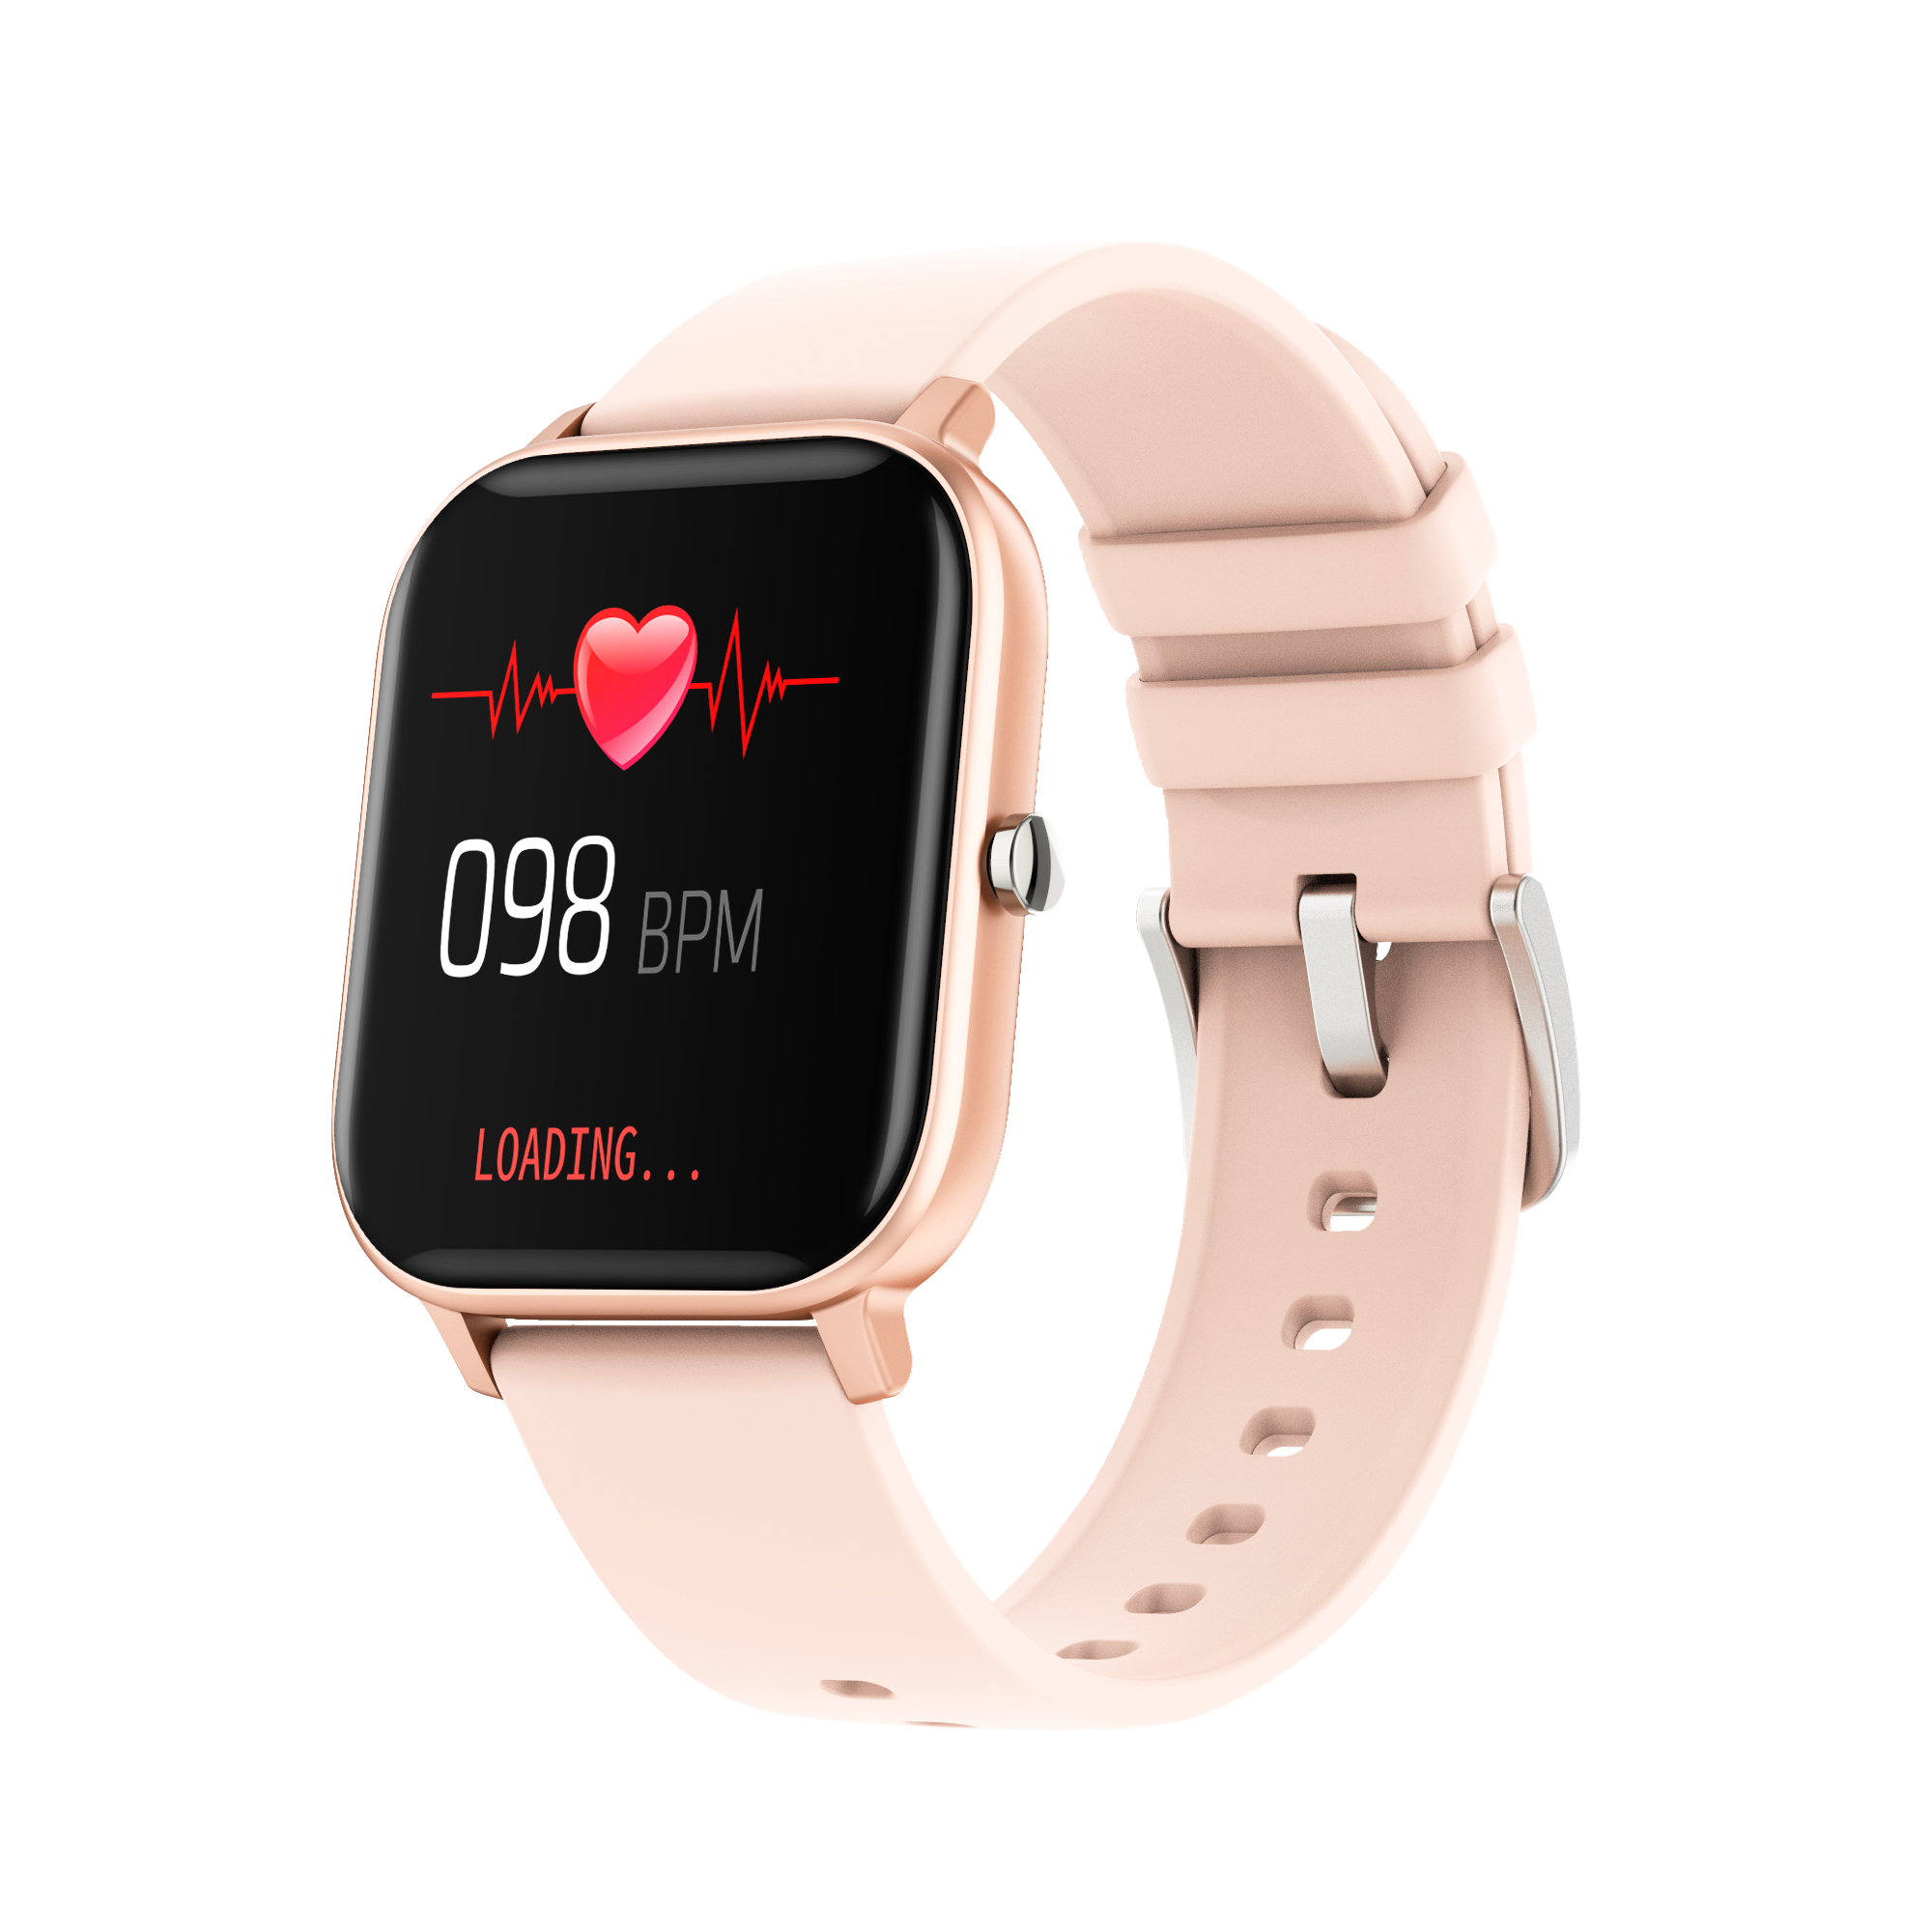 Fire-Boltt smartwatch,Amazon’s